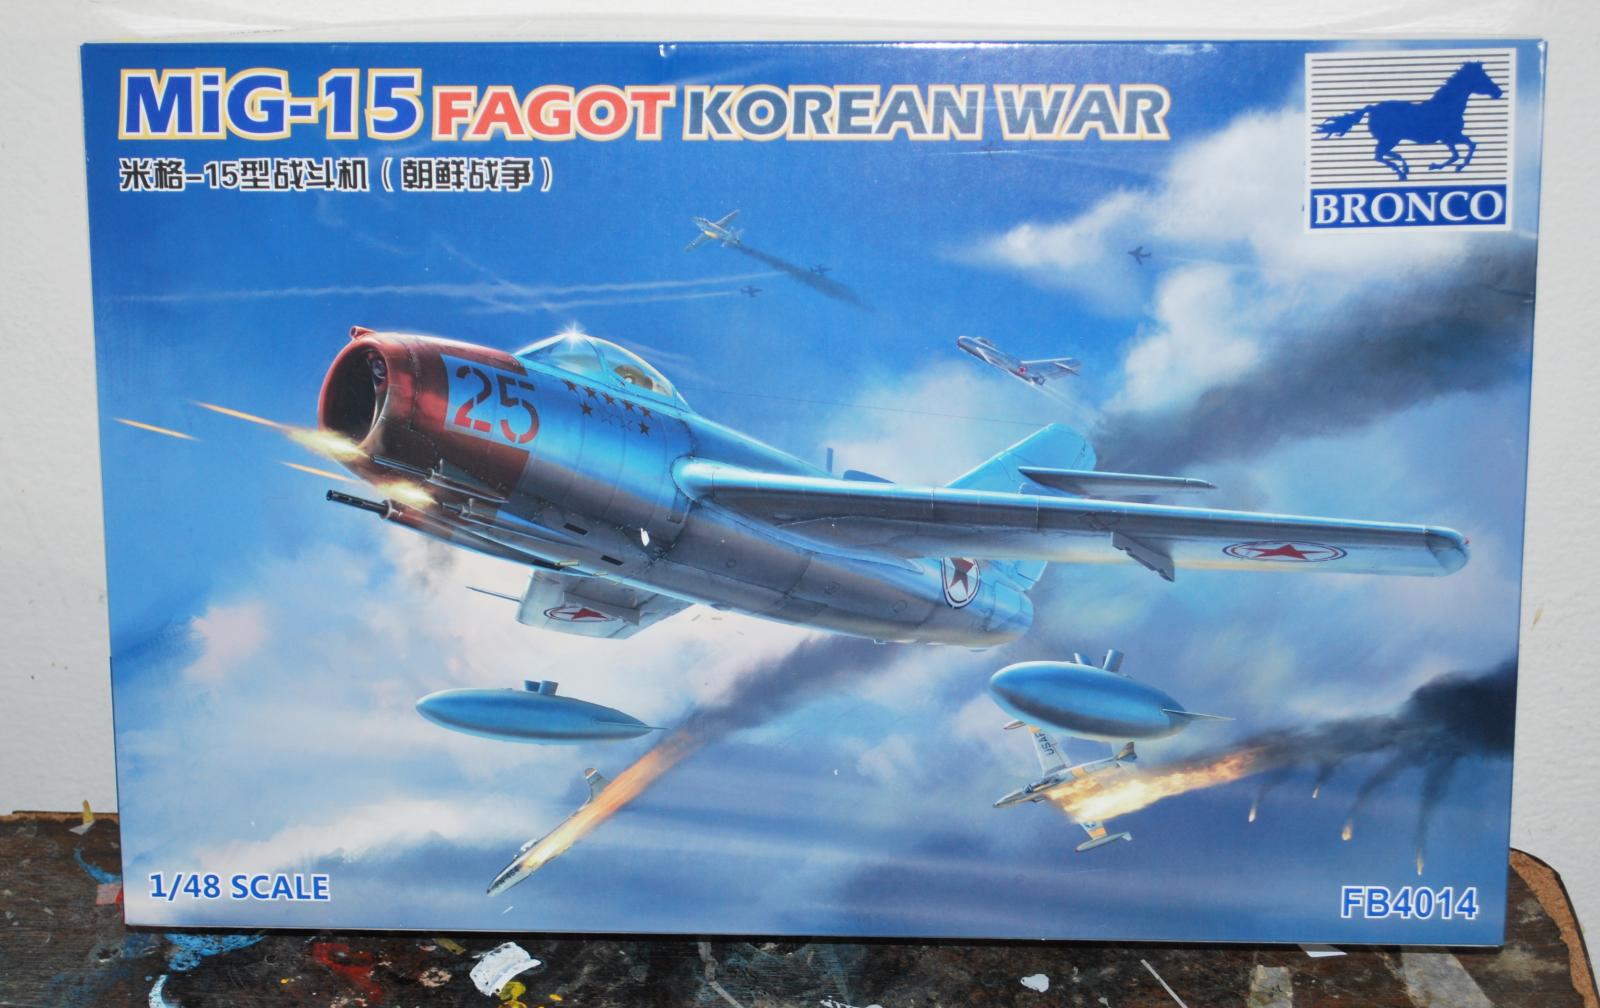 Bronco FB4014 1//48 MIG-15 FAGOT KOREAN WAR Plastic model kit